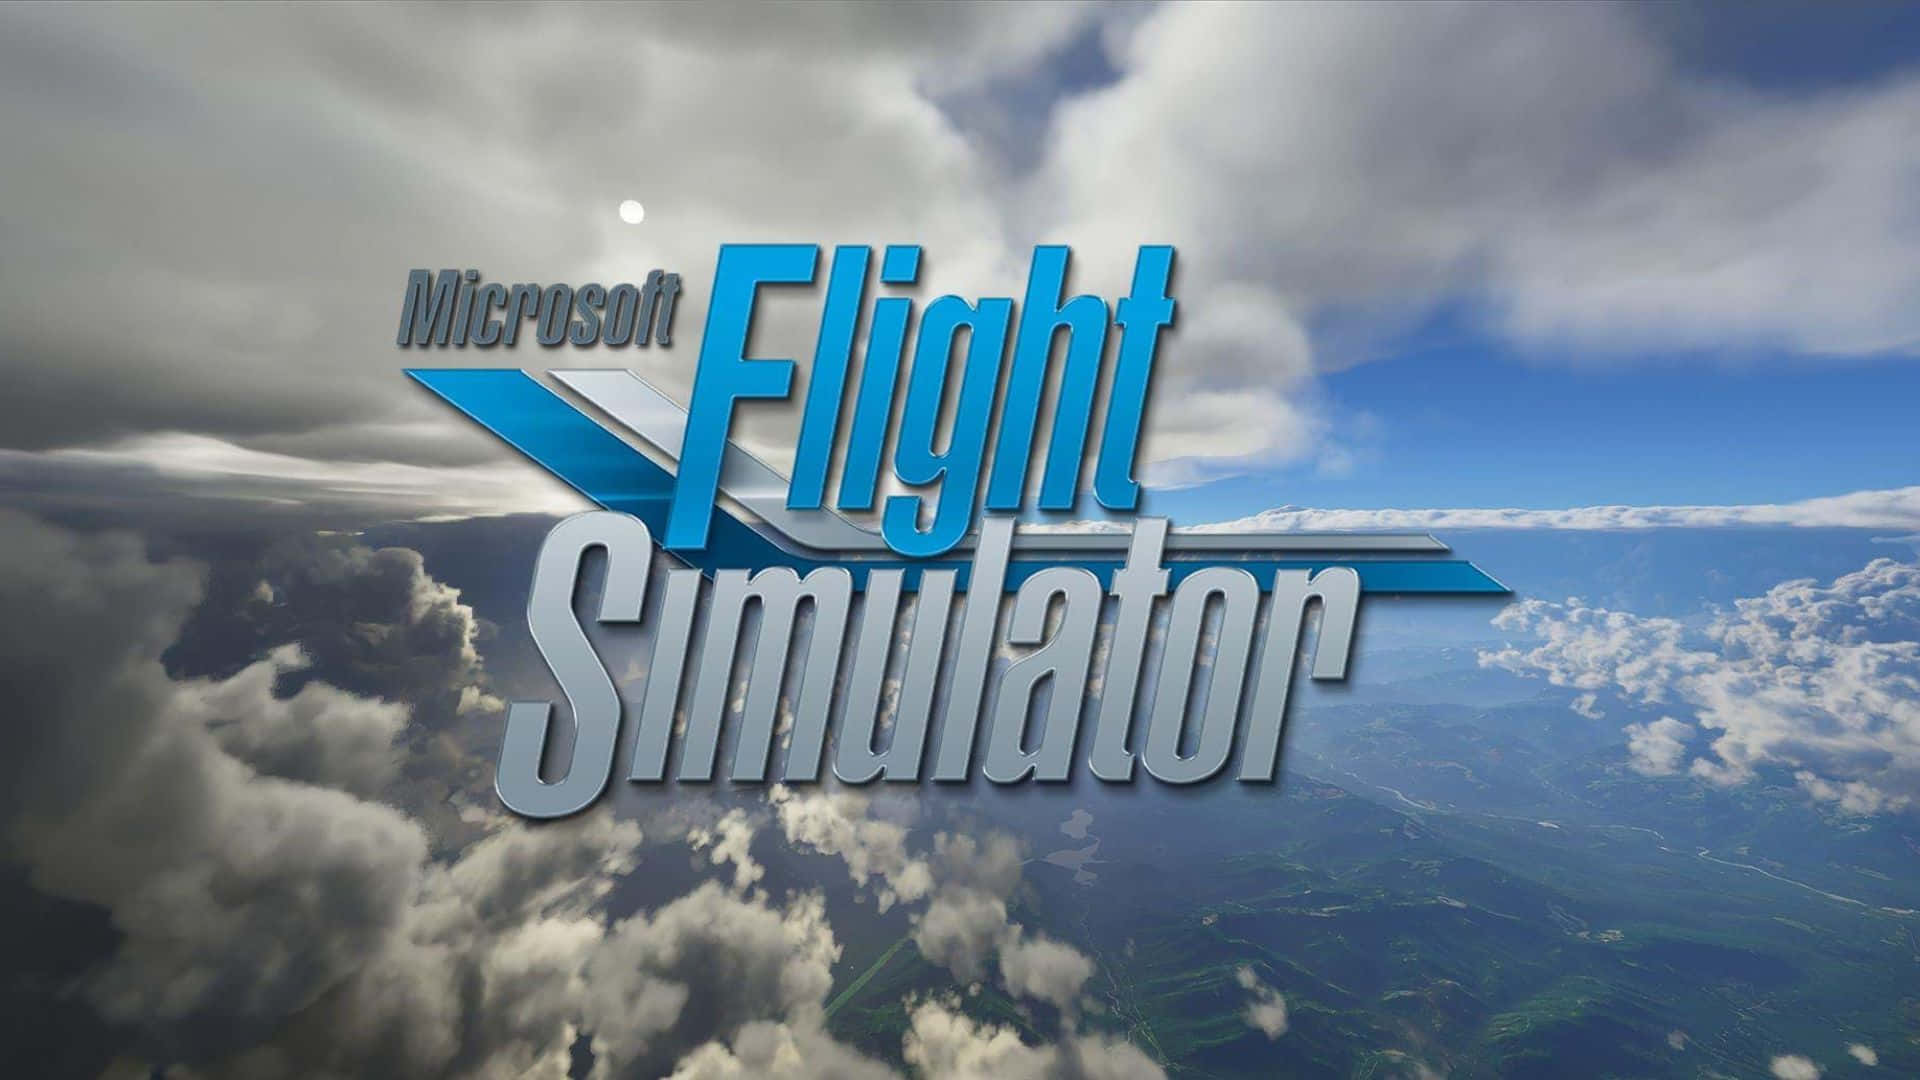 1920x1080 Fondods De Microsoft Flight Simulator